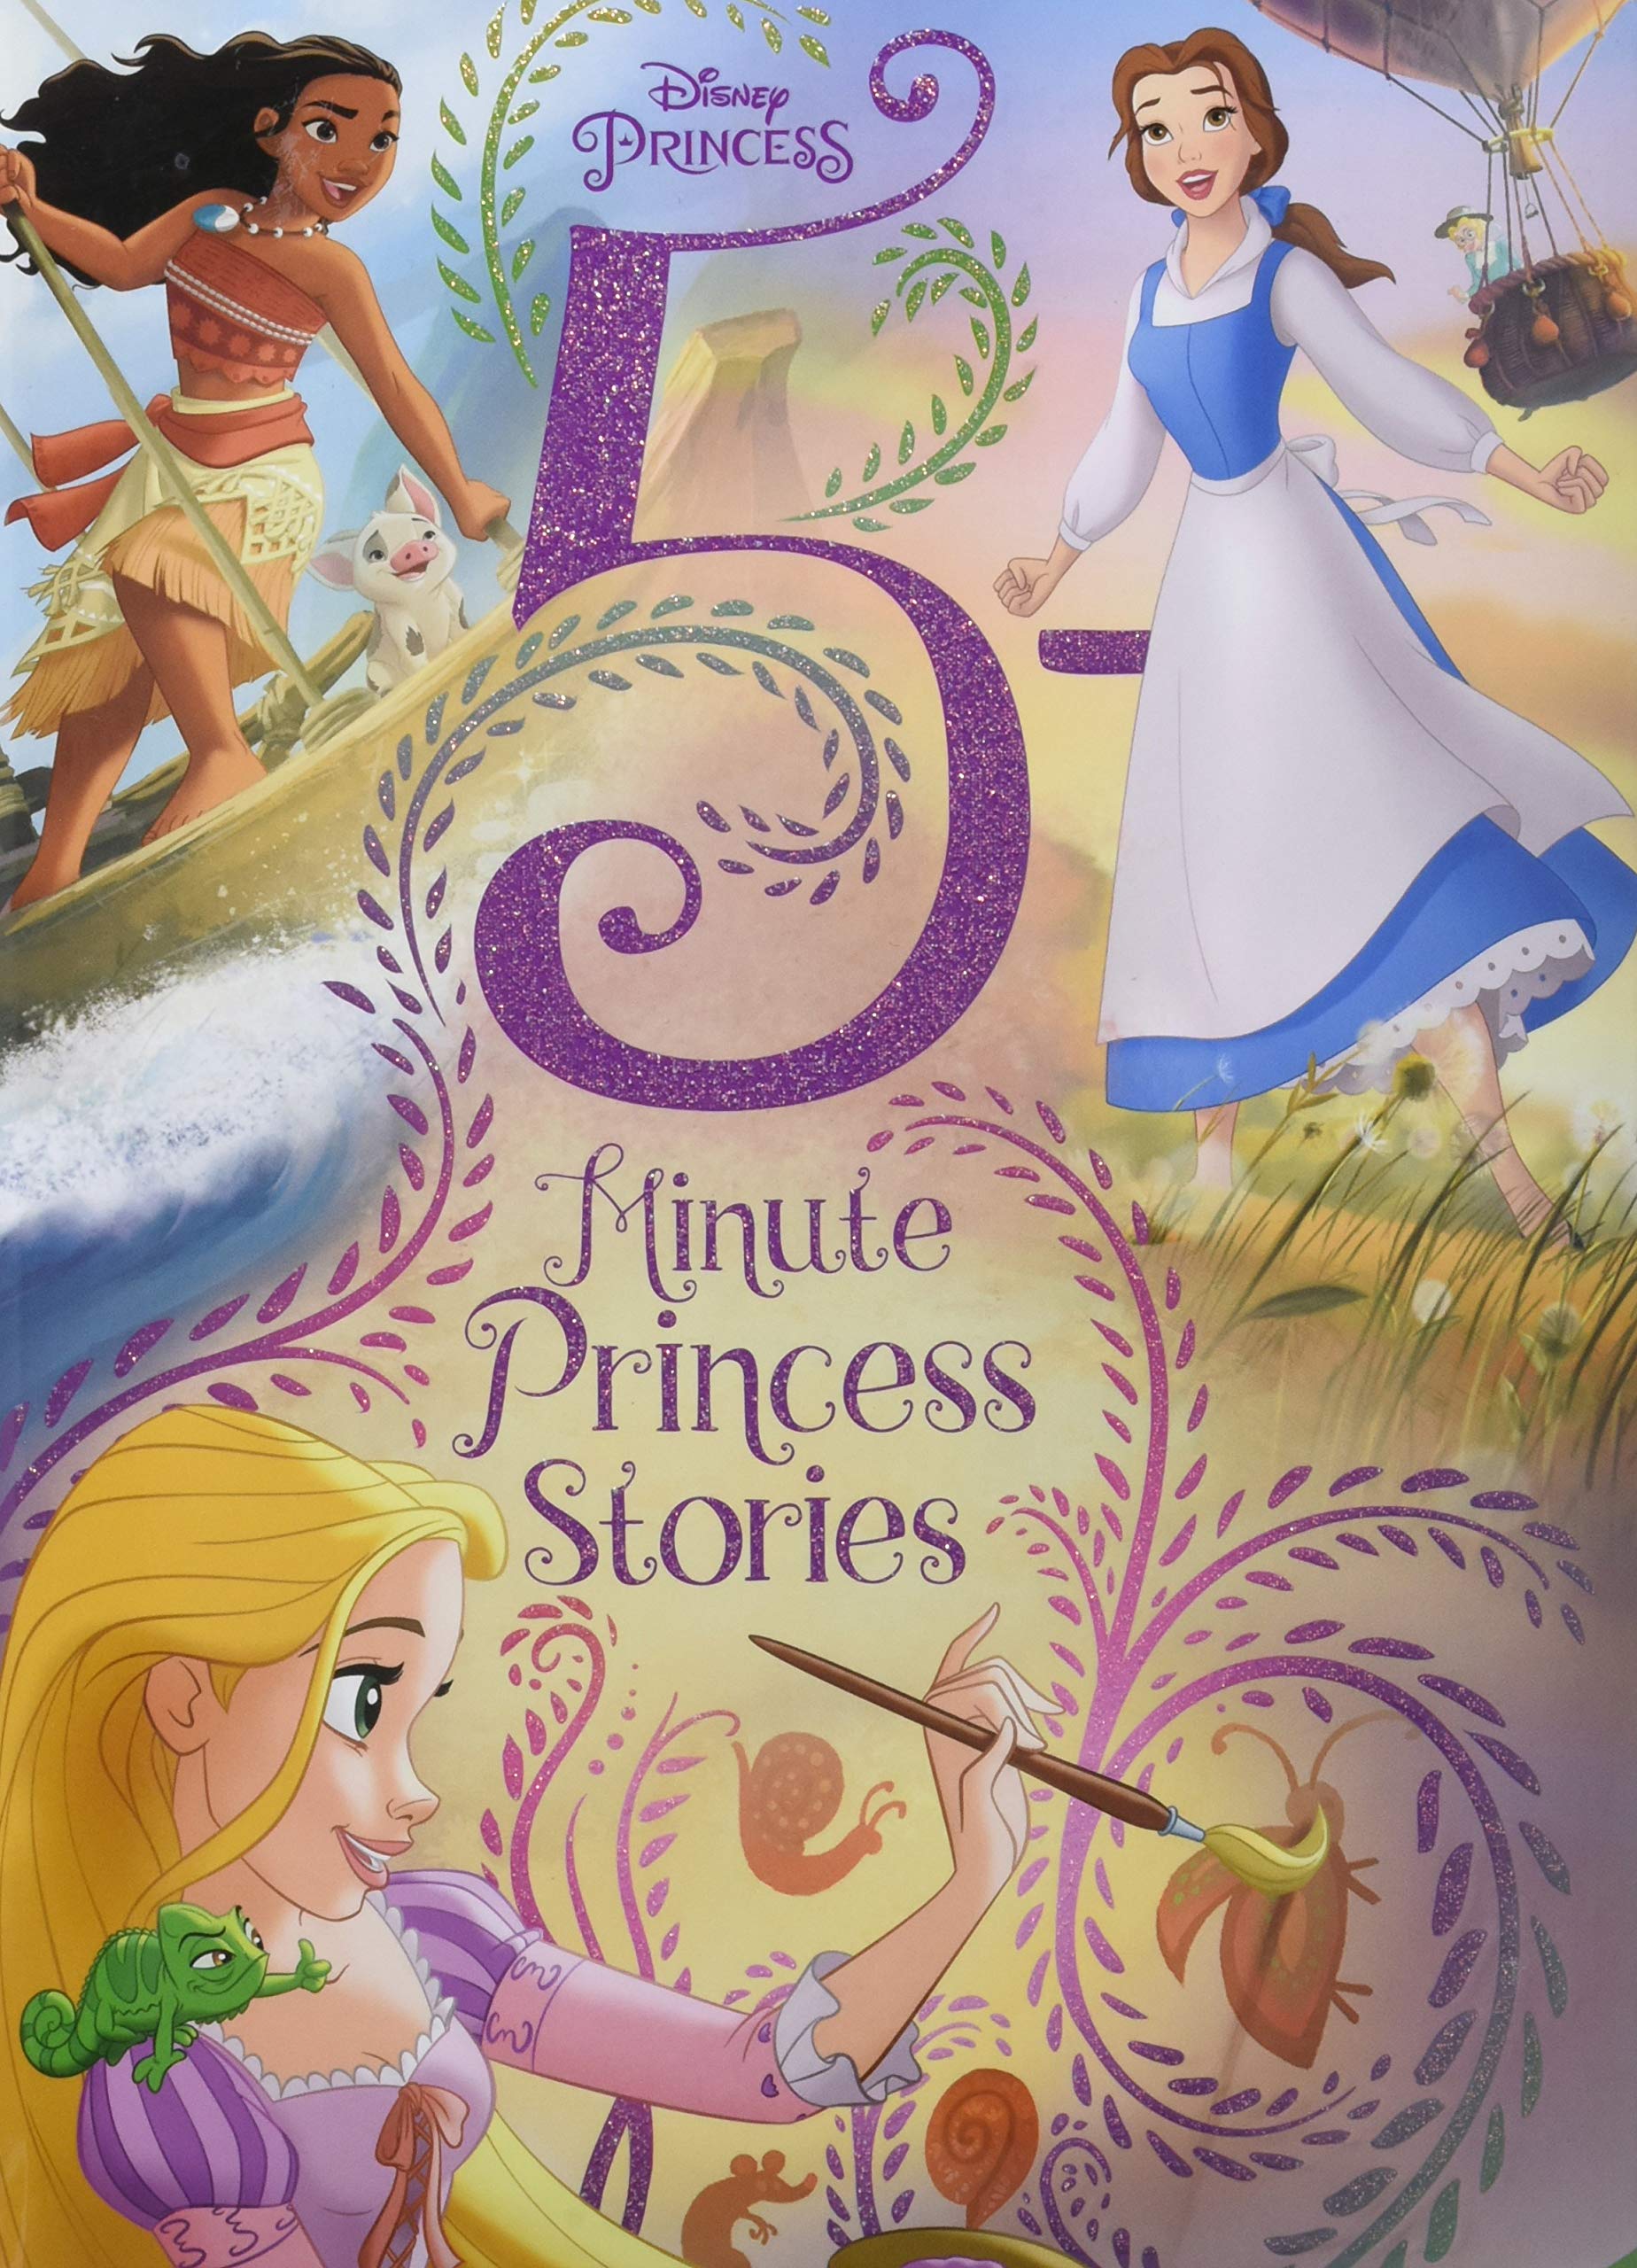 Disney Princess 5 Minute Princess Stories (5 Minute Stories) [Hardcover]